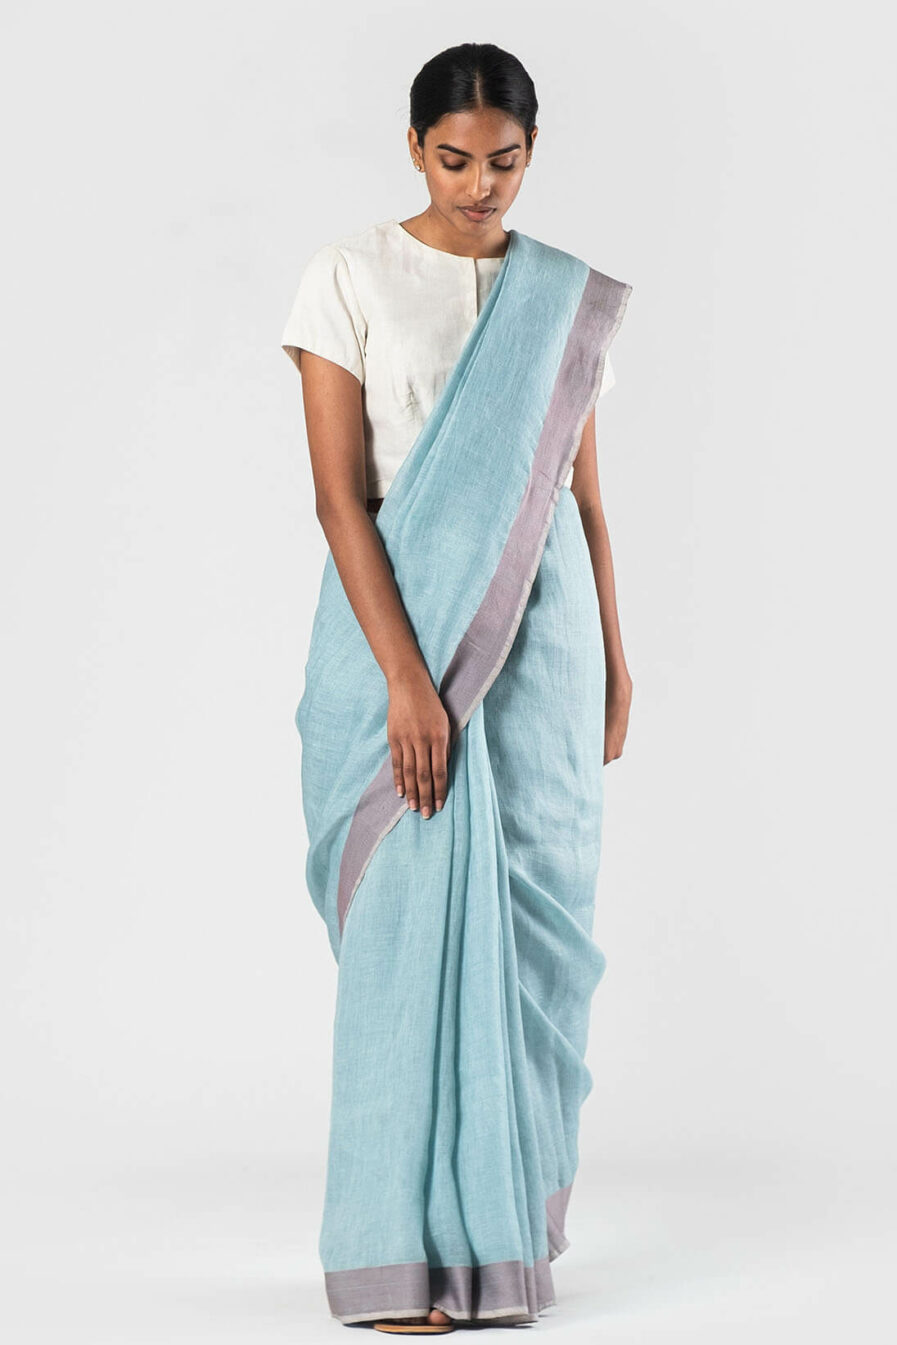 Anavila Sky blue herringbone sari